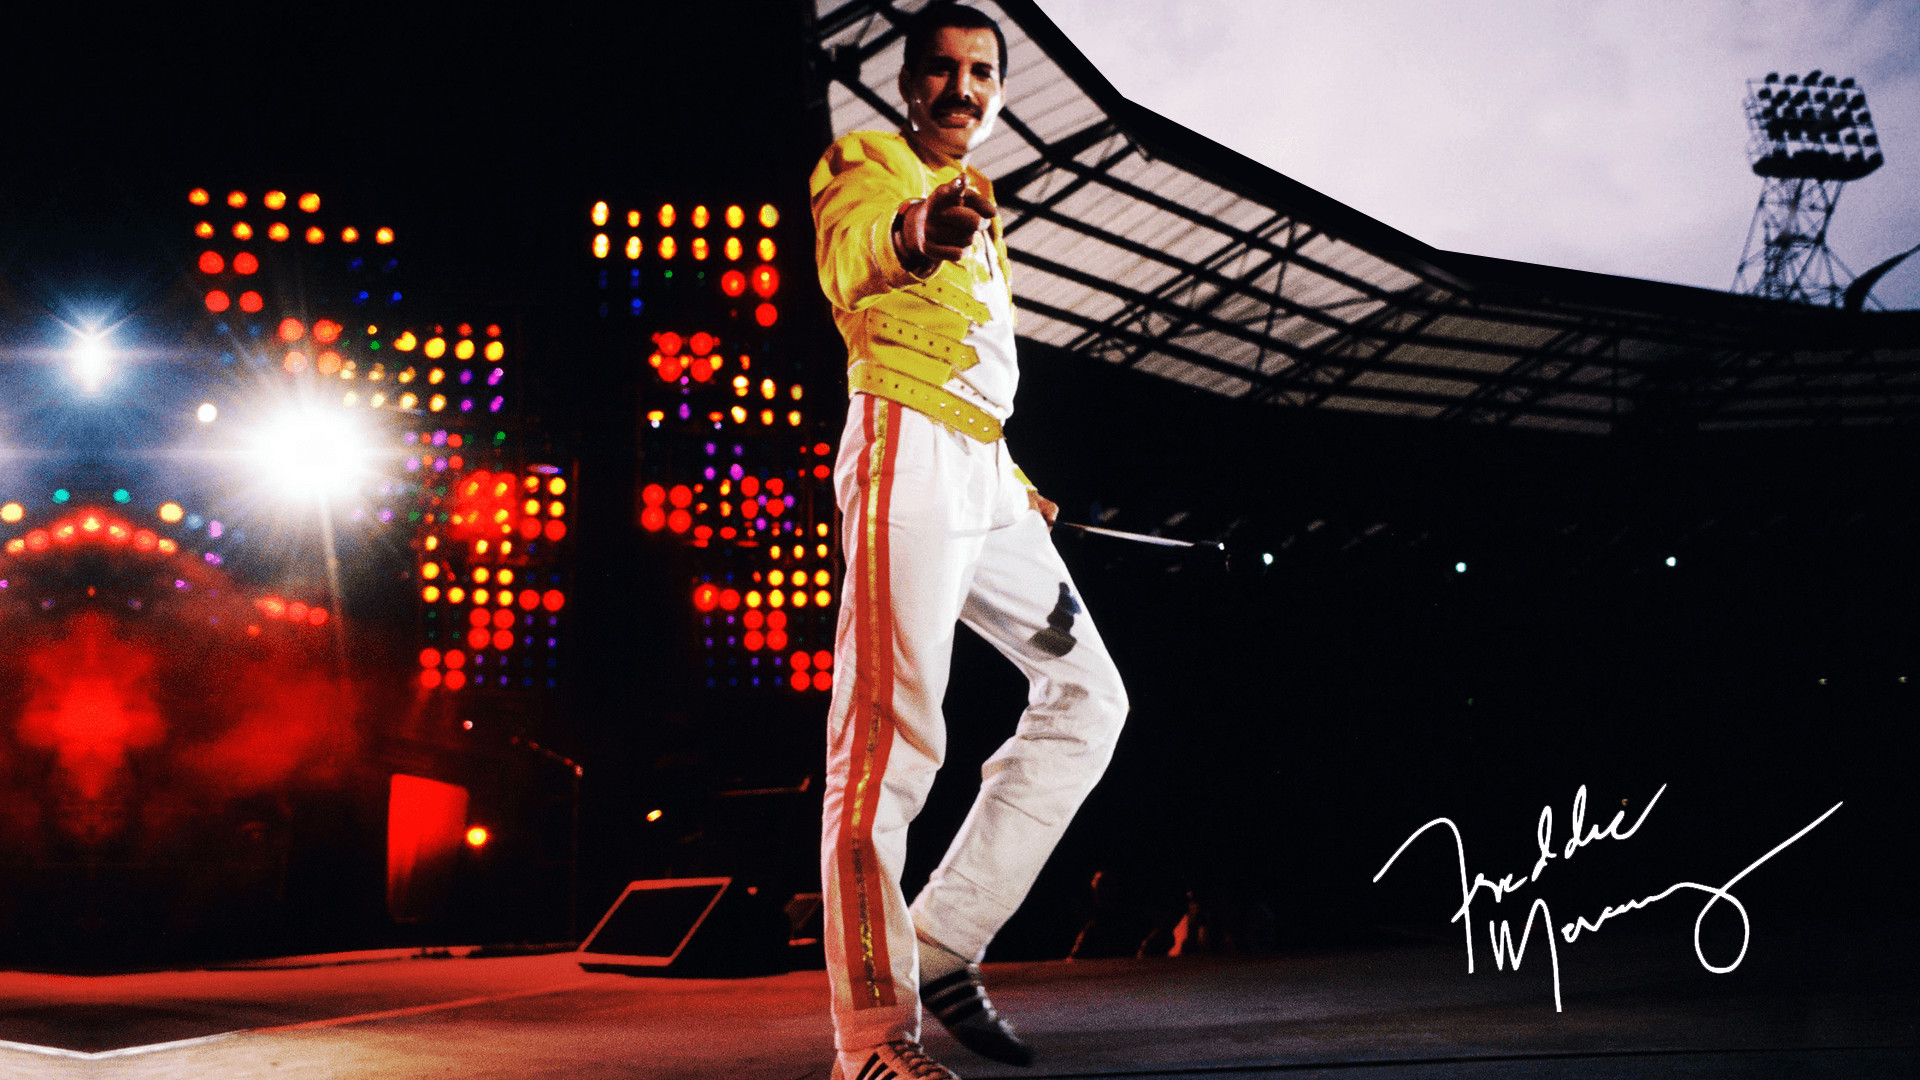 23+] Freddie Mercury Wallpapers - WallpaperSafari